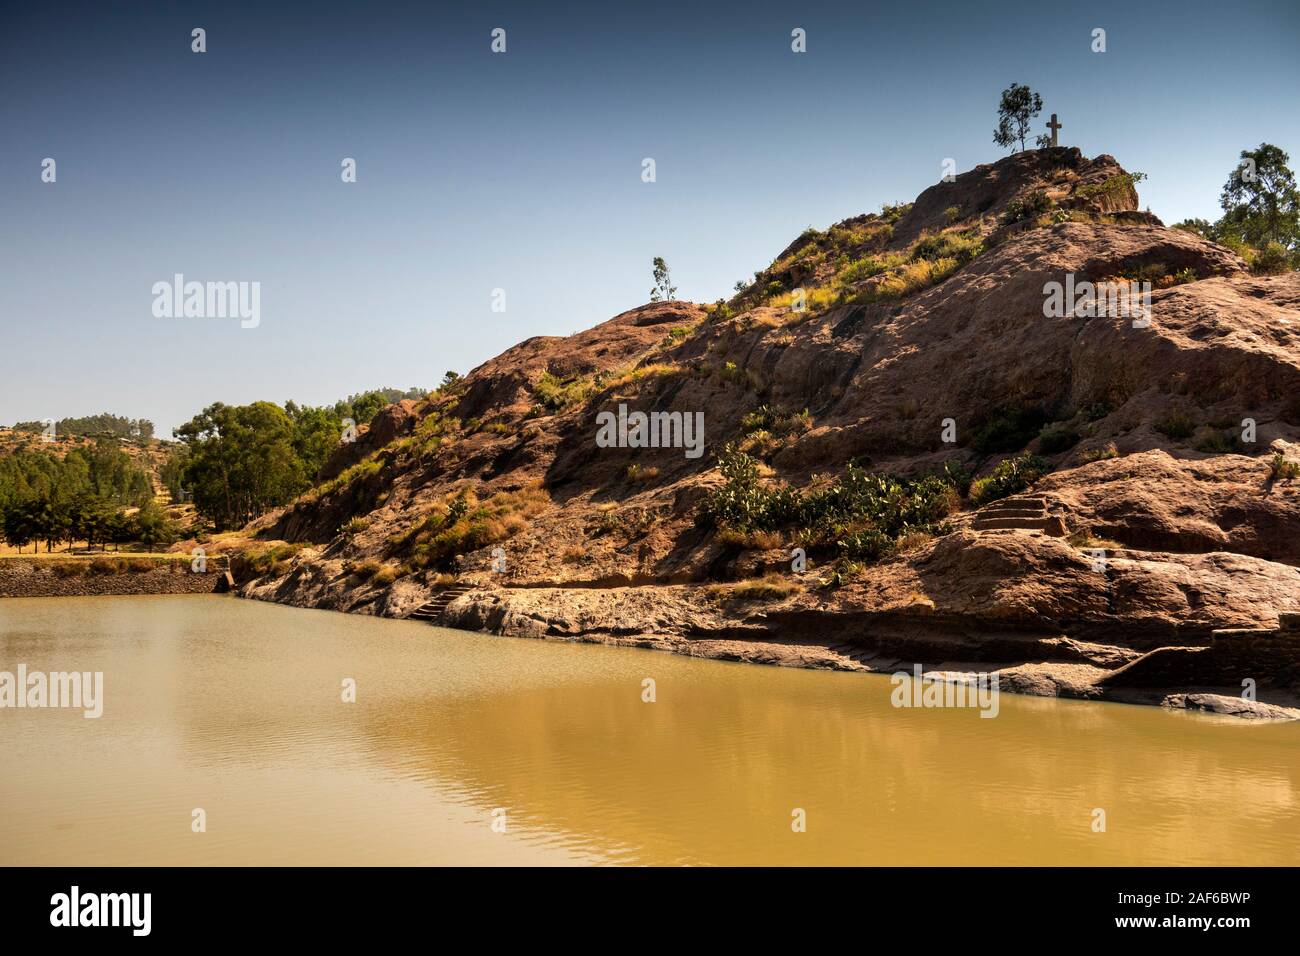 Ethiopia, Tigray, Axum (Aksum), May Shum, Queen of Sheba’s Pool, rock hewn reservoir Stock Photo